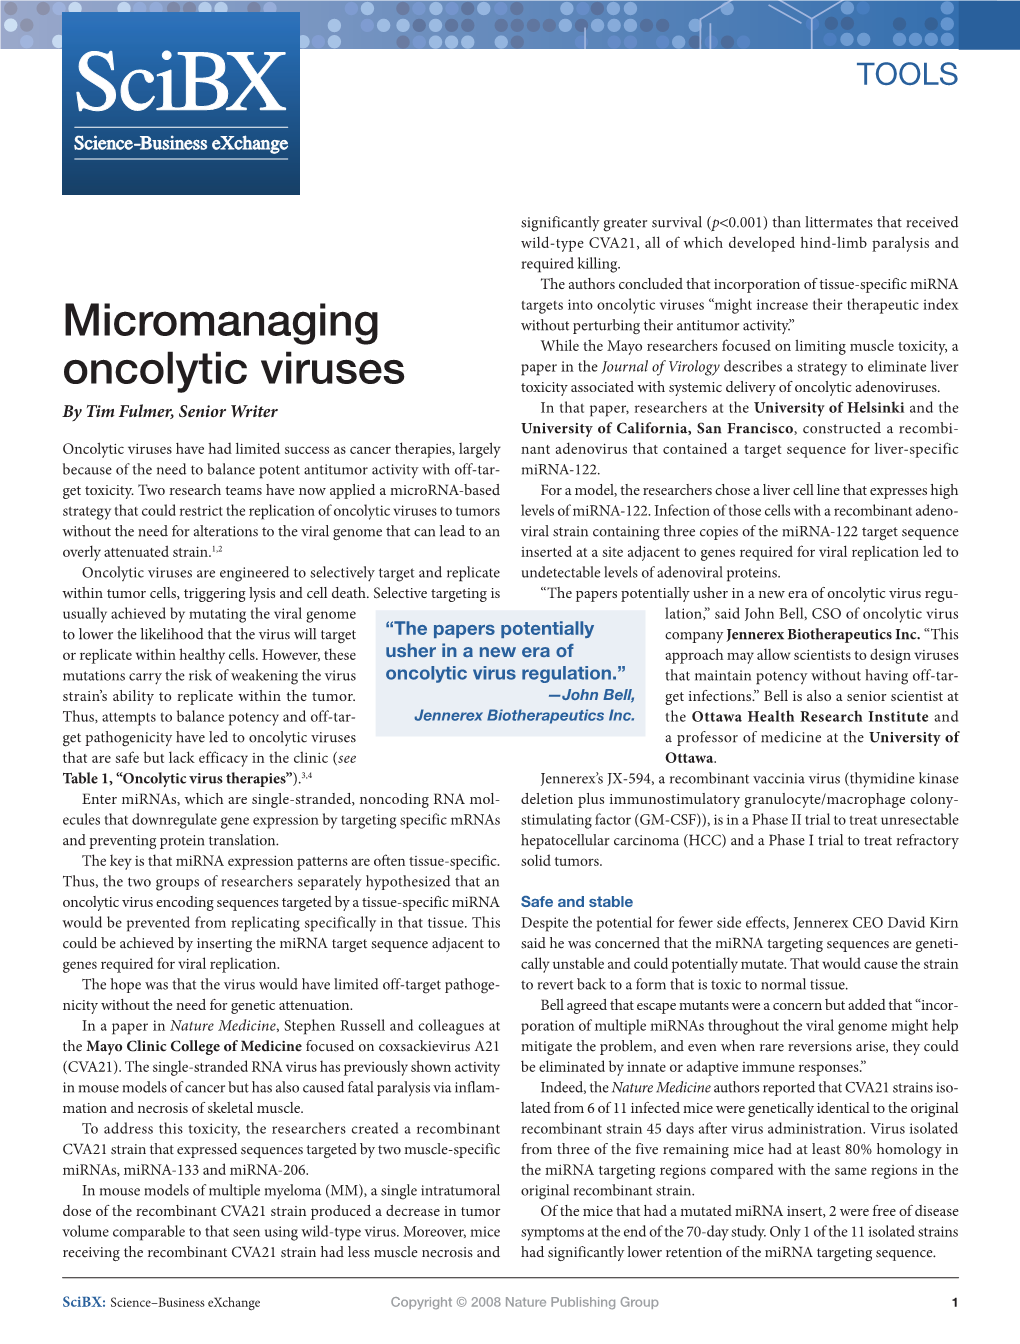 Micromanaging Oncolytic Viruses